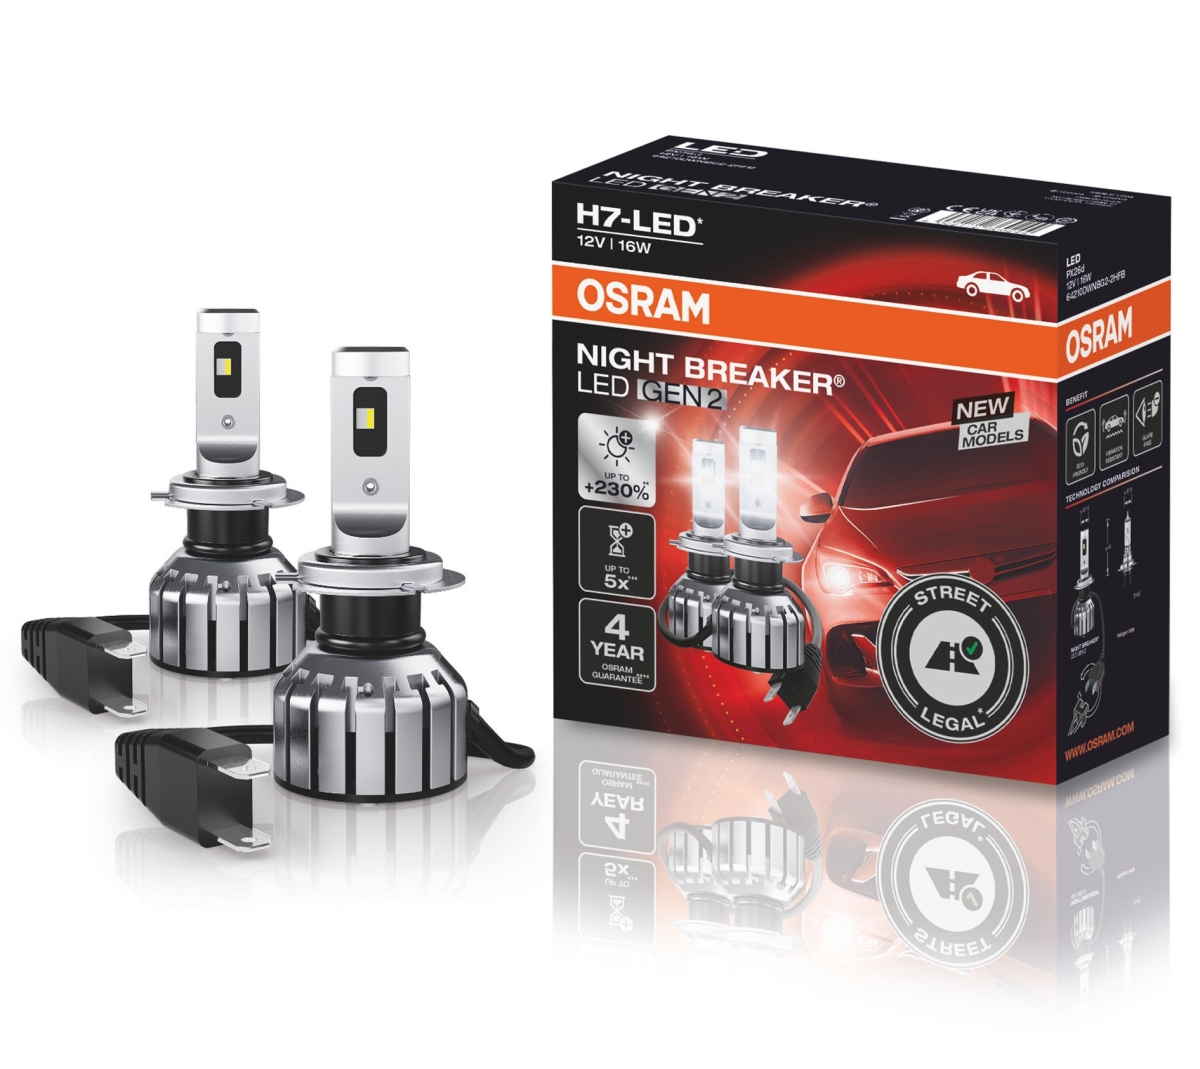 OSRAM NIGHT BREAKER LED Gen 2 H7 Set 230% für Audi A2 8Z Bj 2000-2005